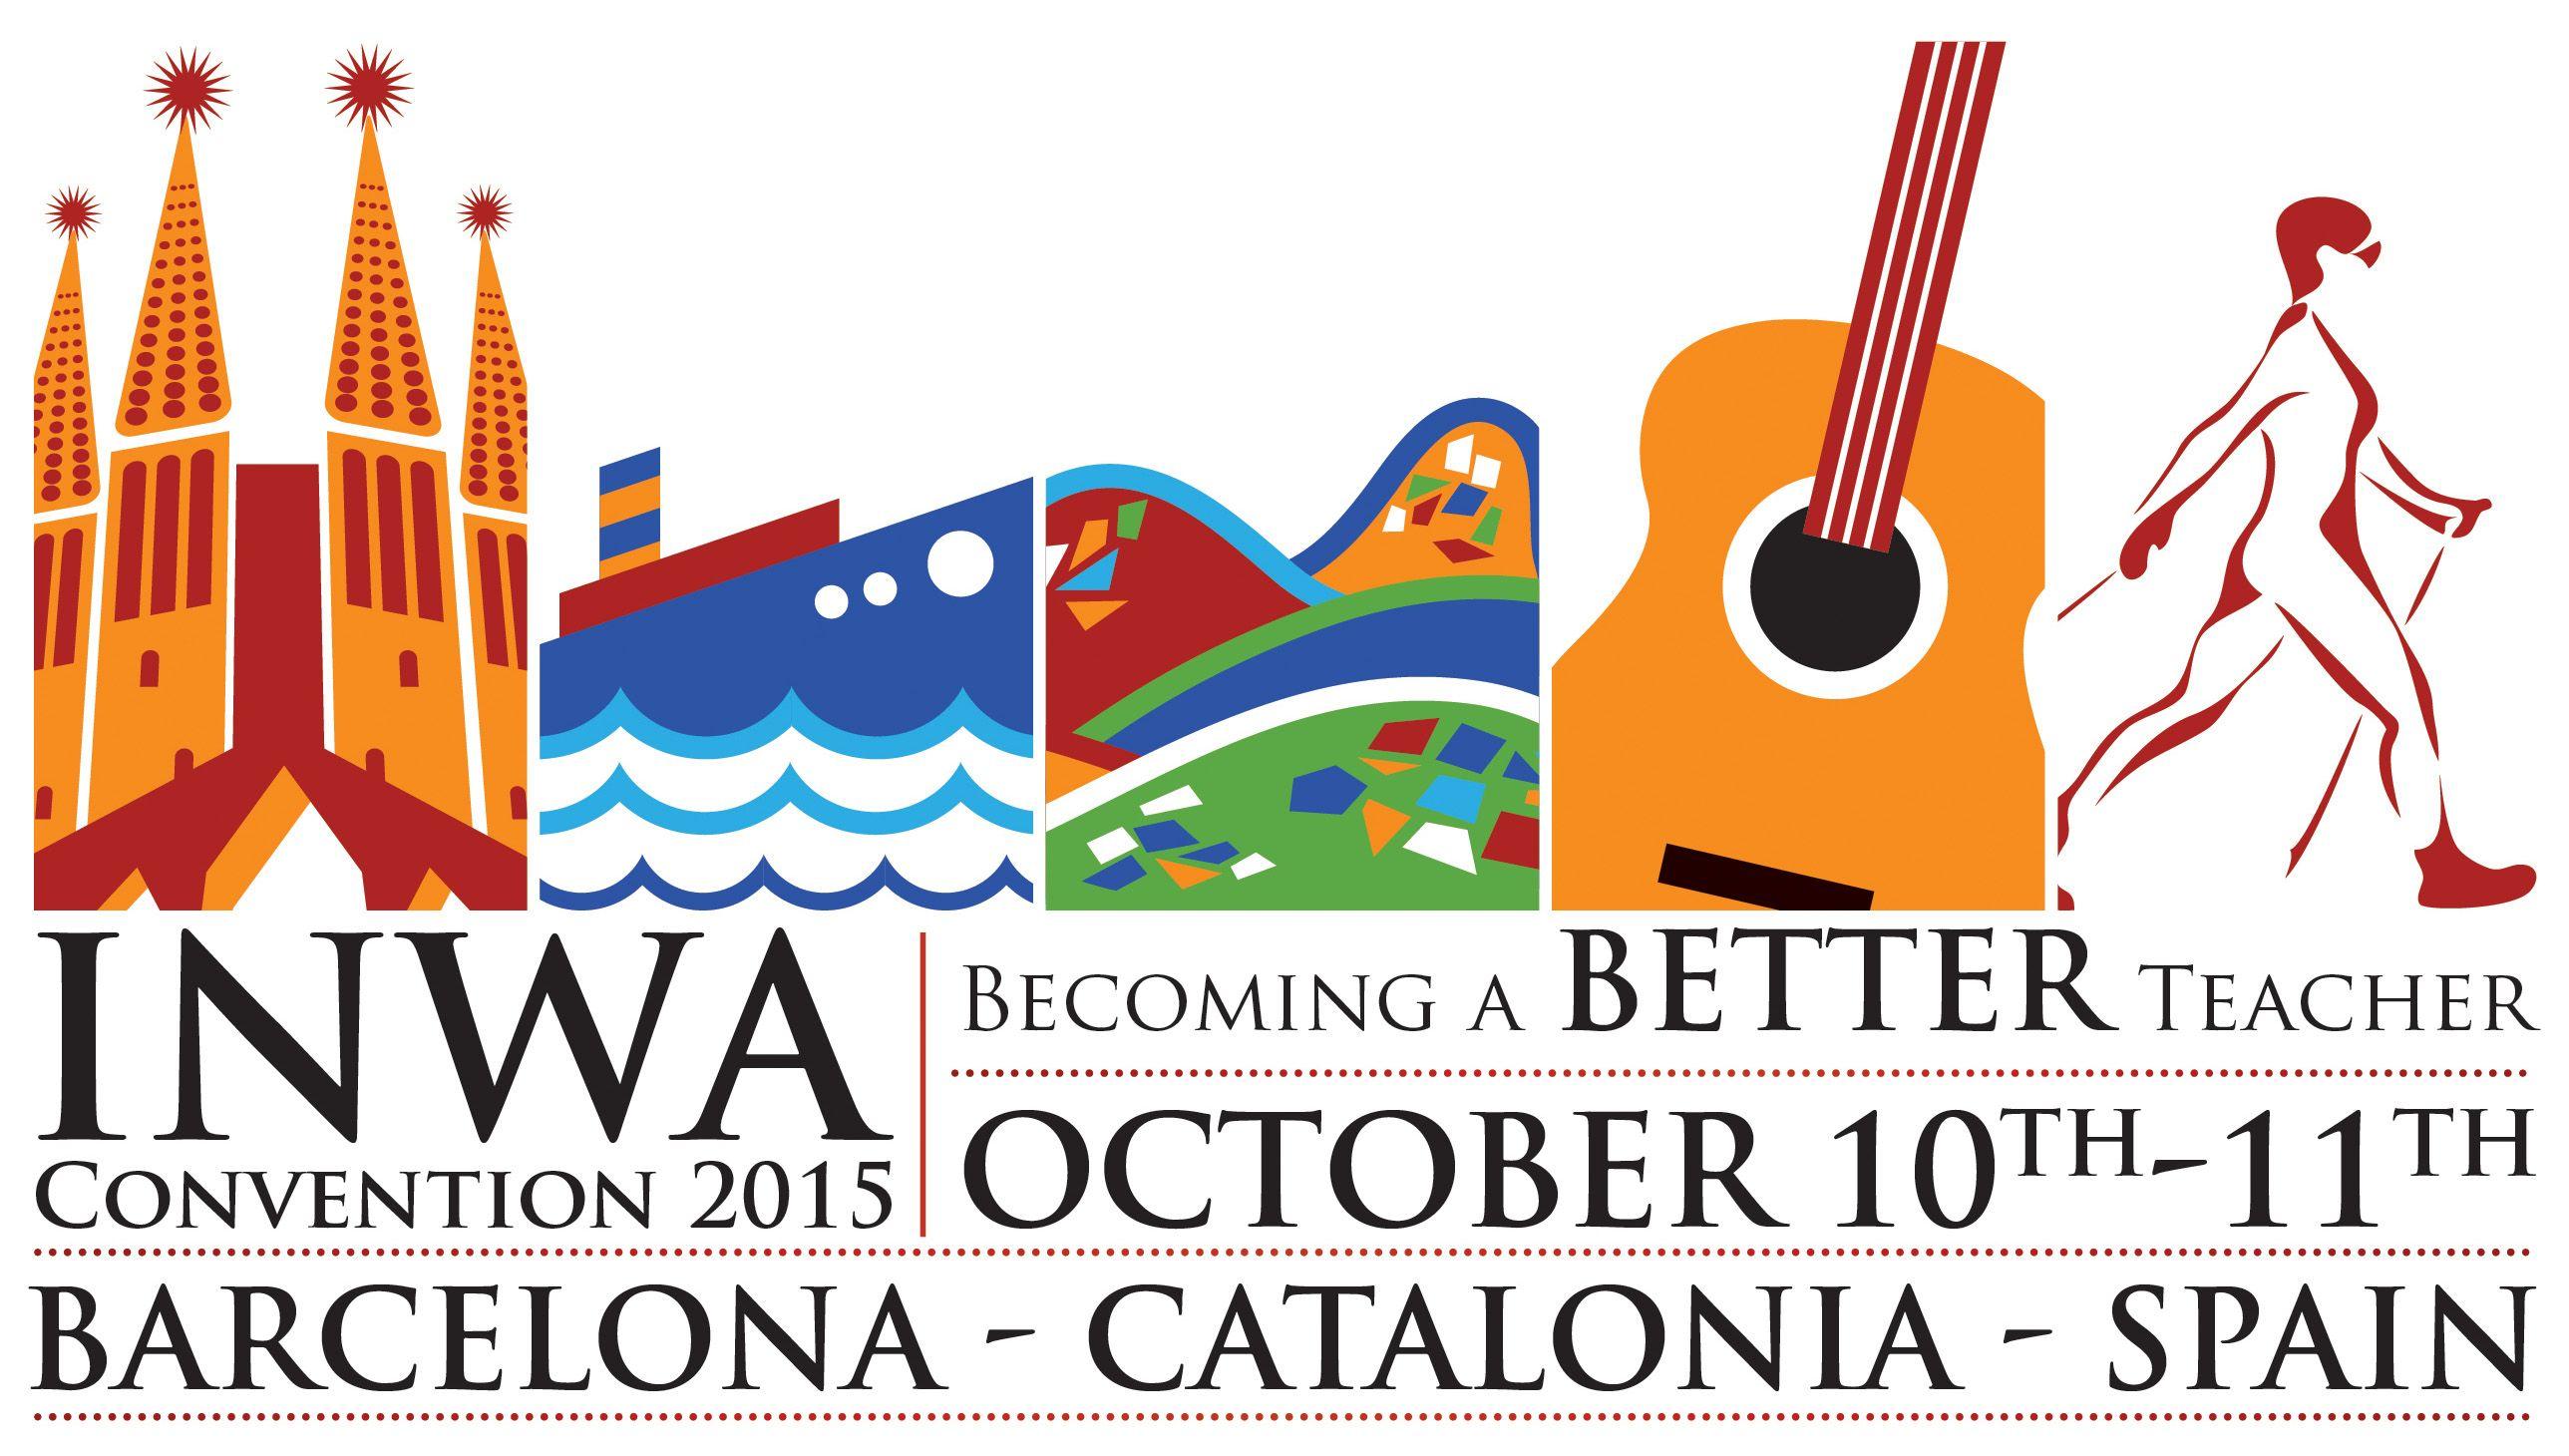 Convention Logo - INWA Convention 2015 - INWA